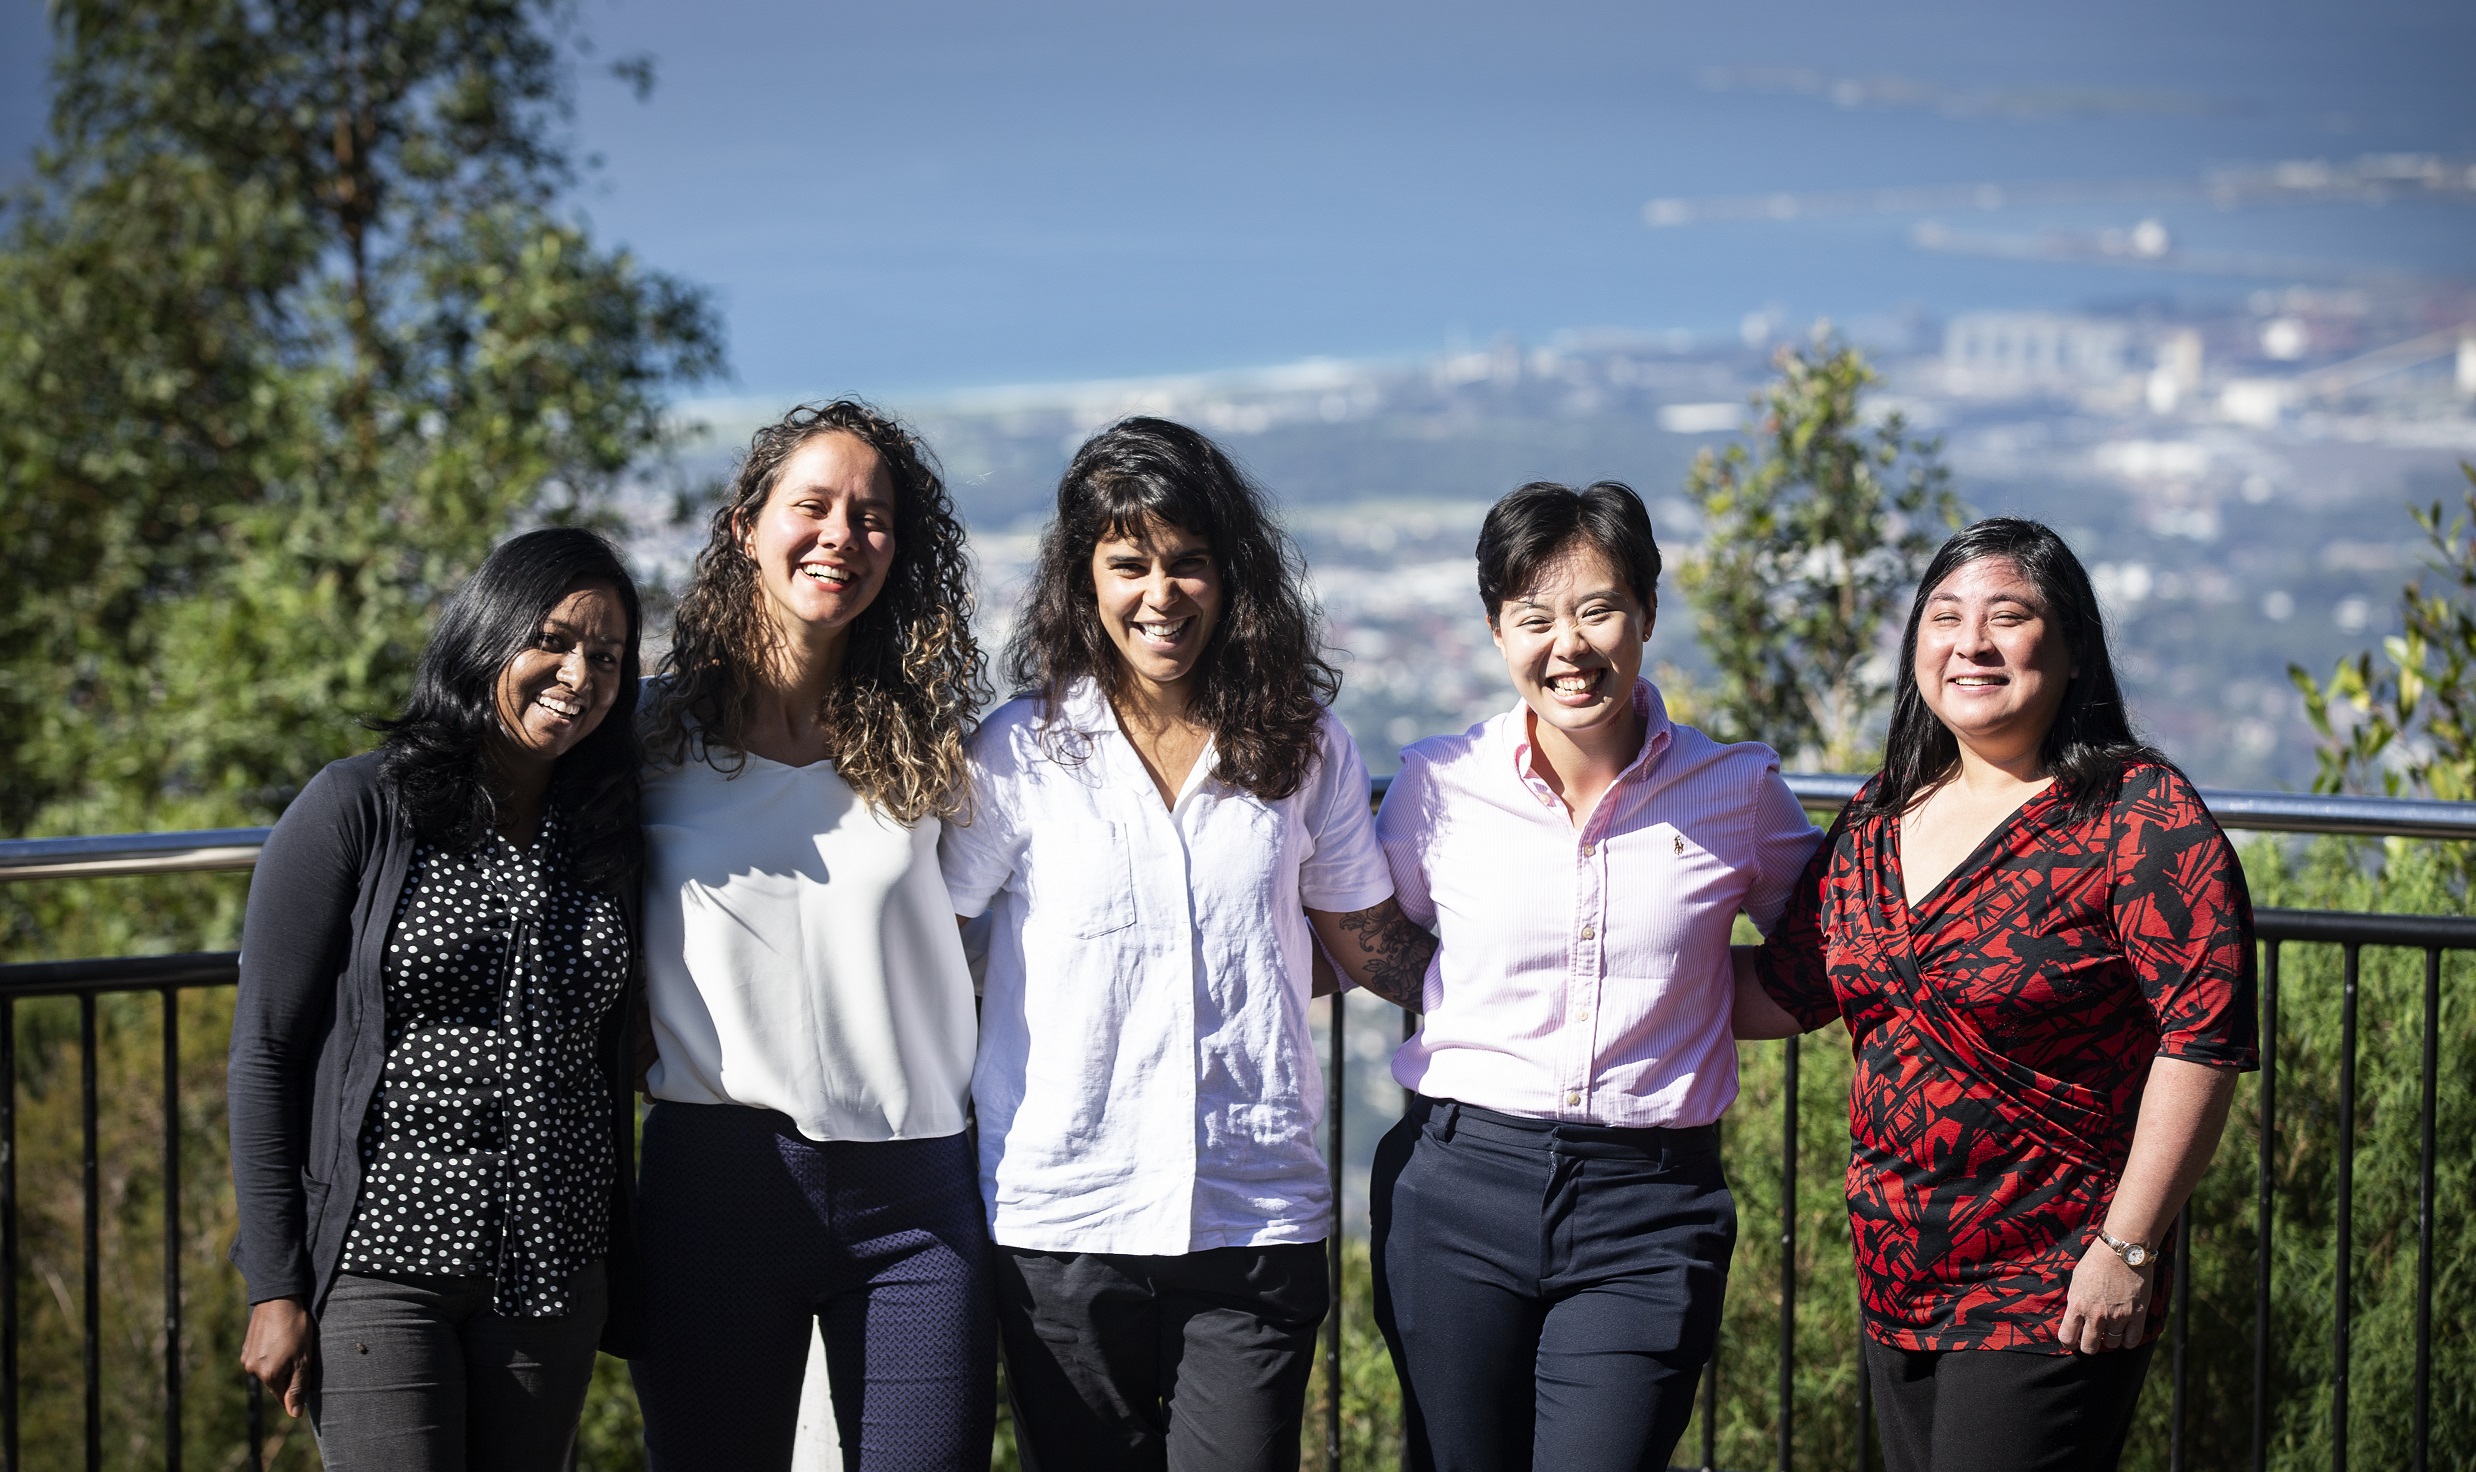 Introducing WREN – connecting women engineers in Brazil and Australia